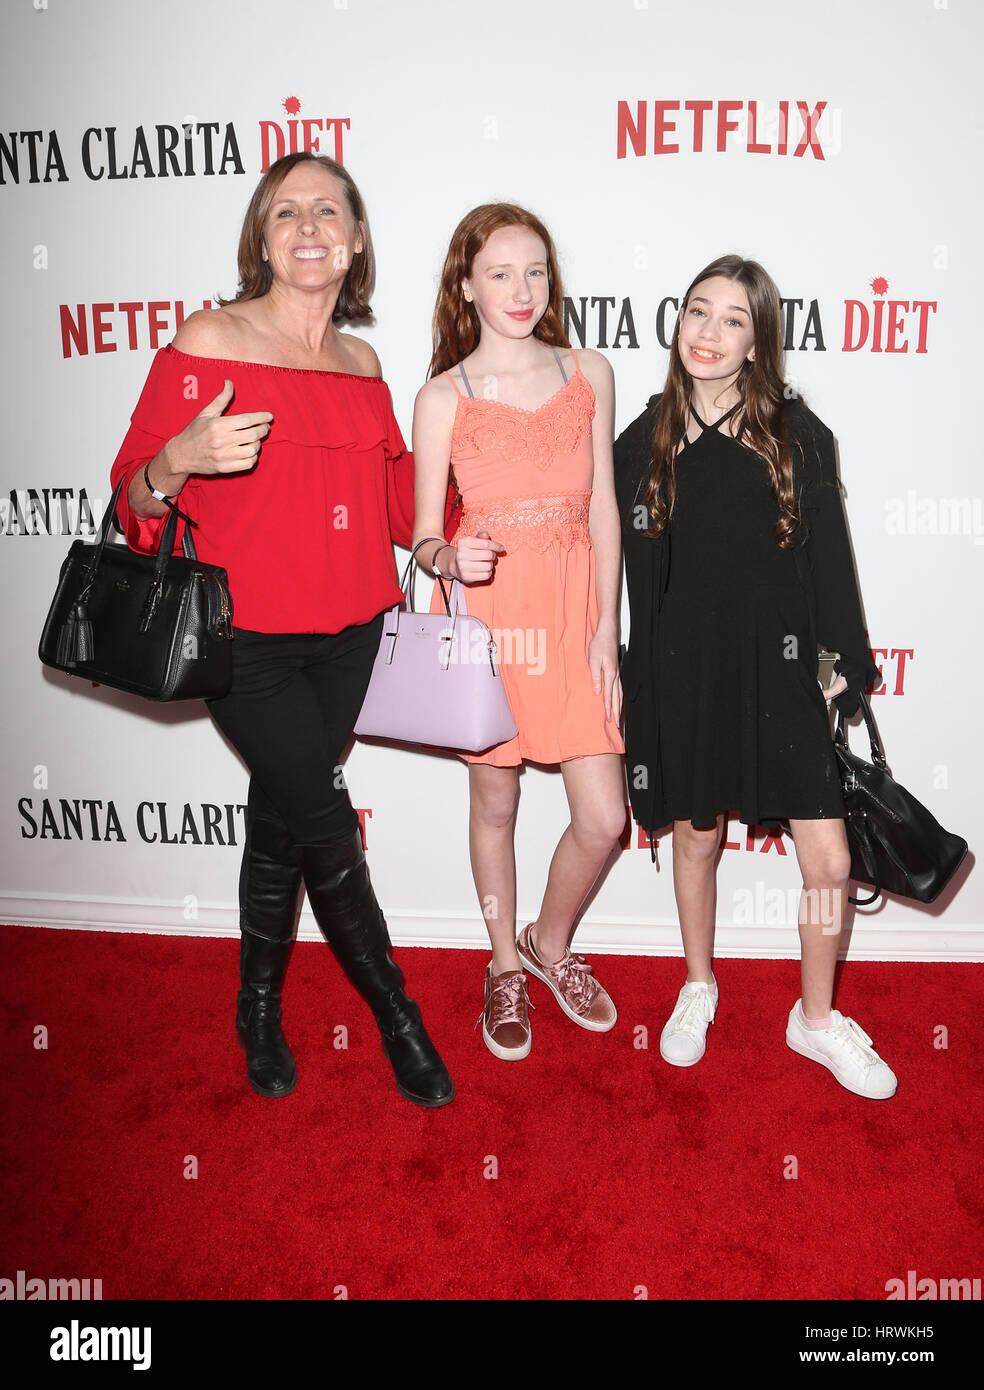 Los Angeles premiere of Netflix's 'Santa Clarita Diet' - Arrivals  Featuring: Molly Shannon, Stella Shannon Chesnut, Guest Where: Los Angeles, California, United States When: 01 Feb 2017 Stock Photo